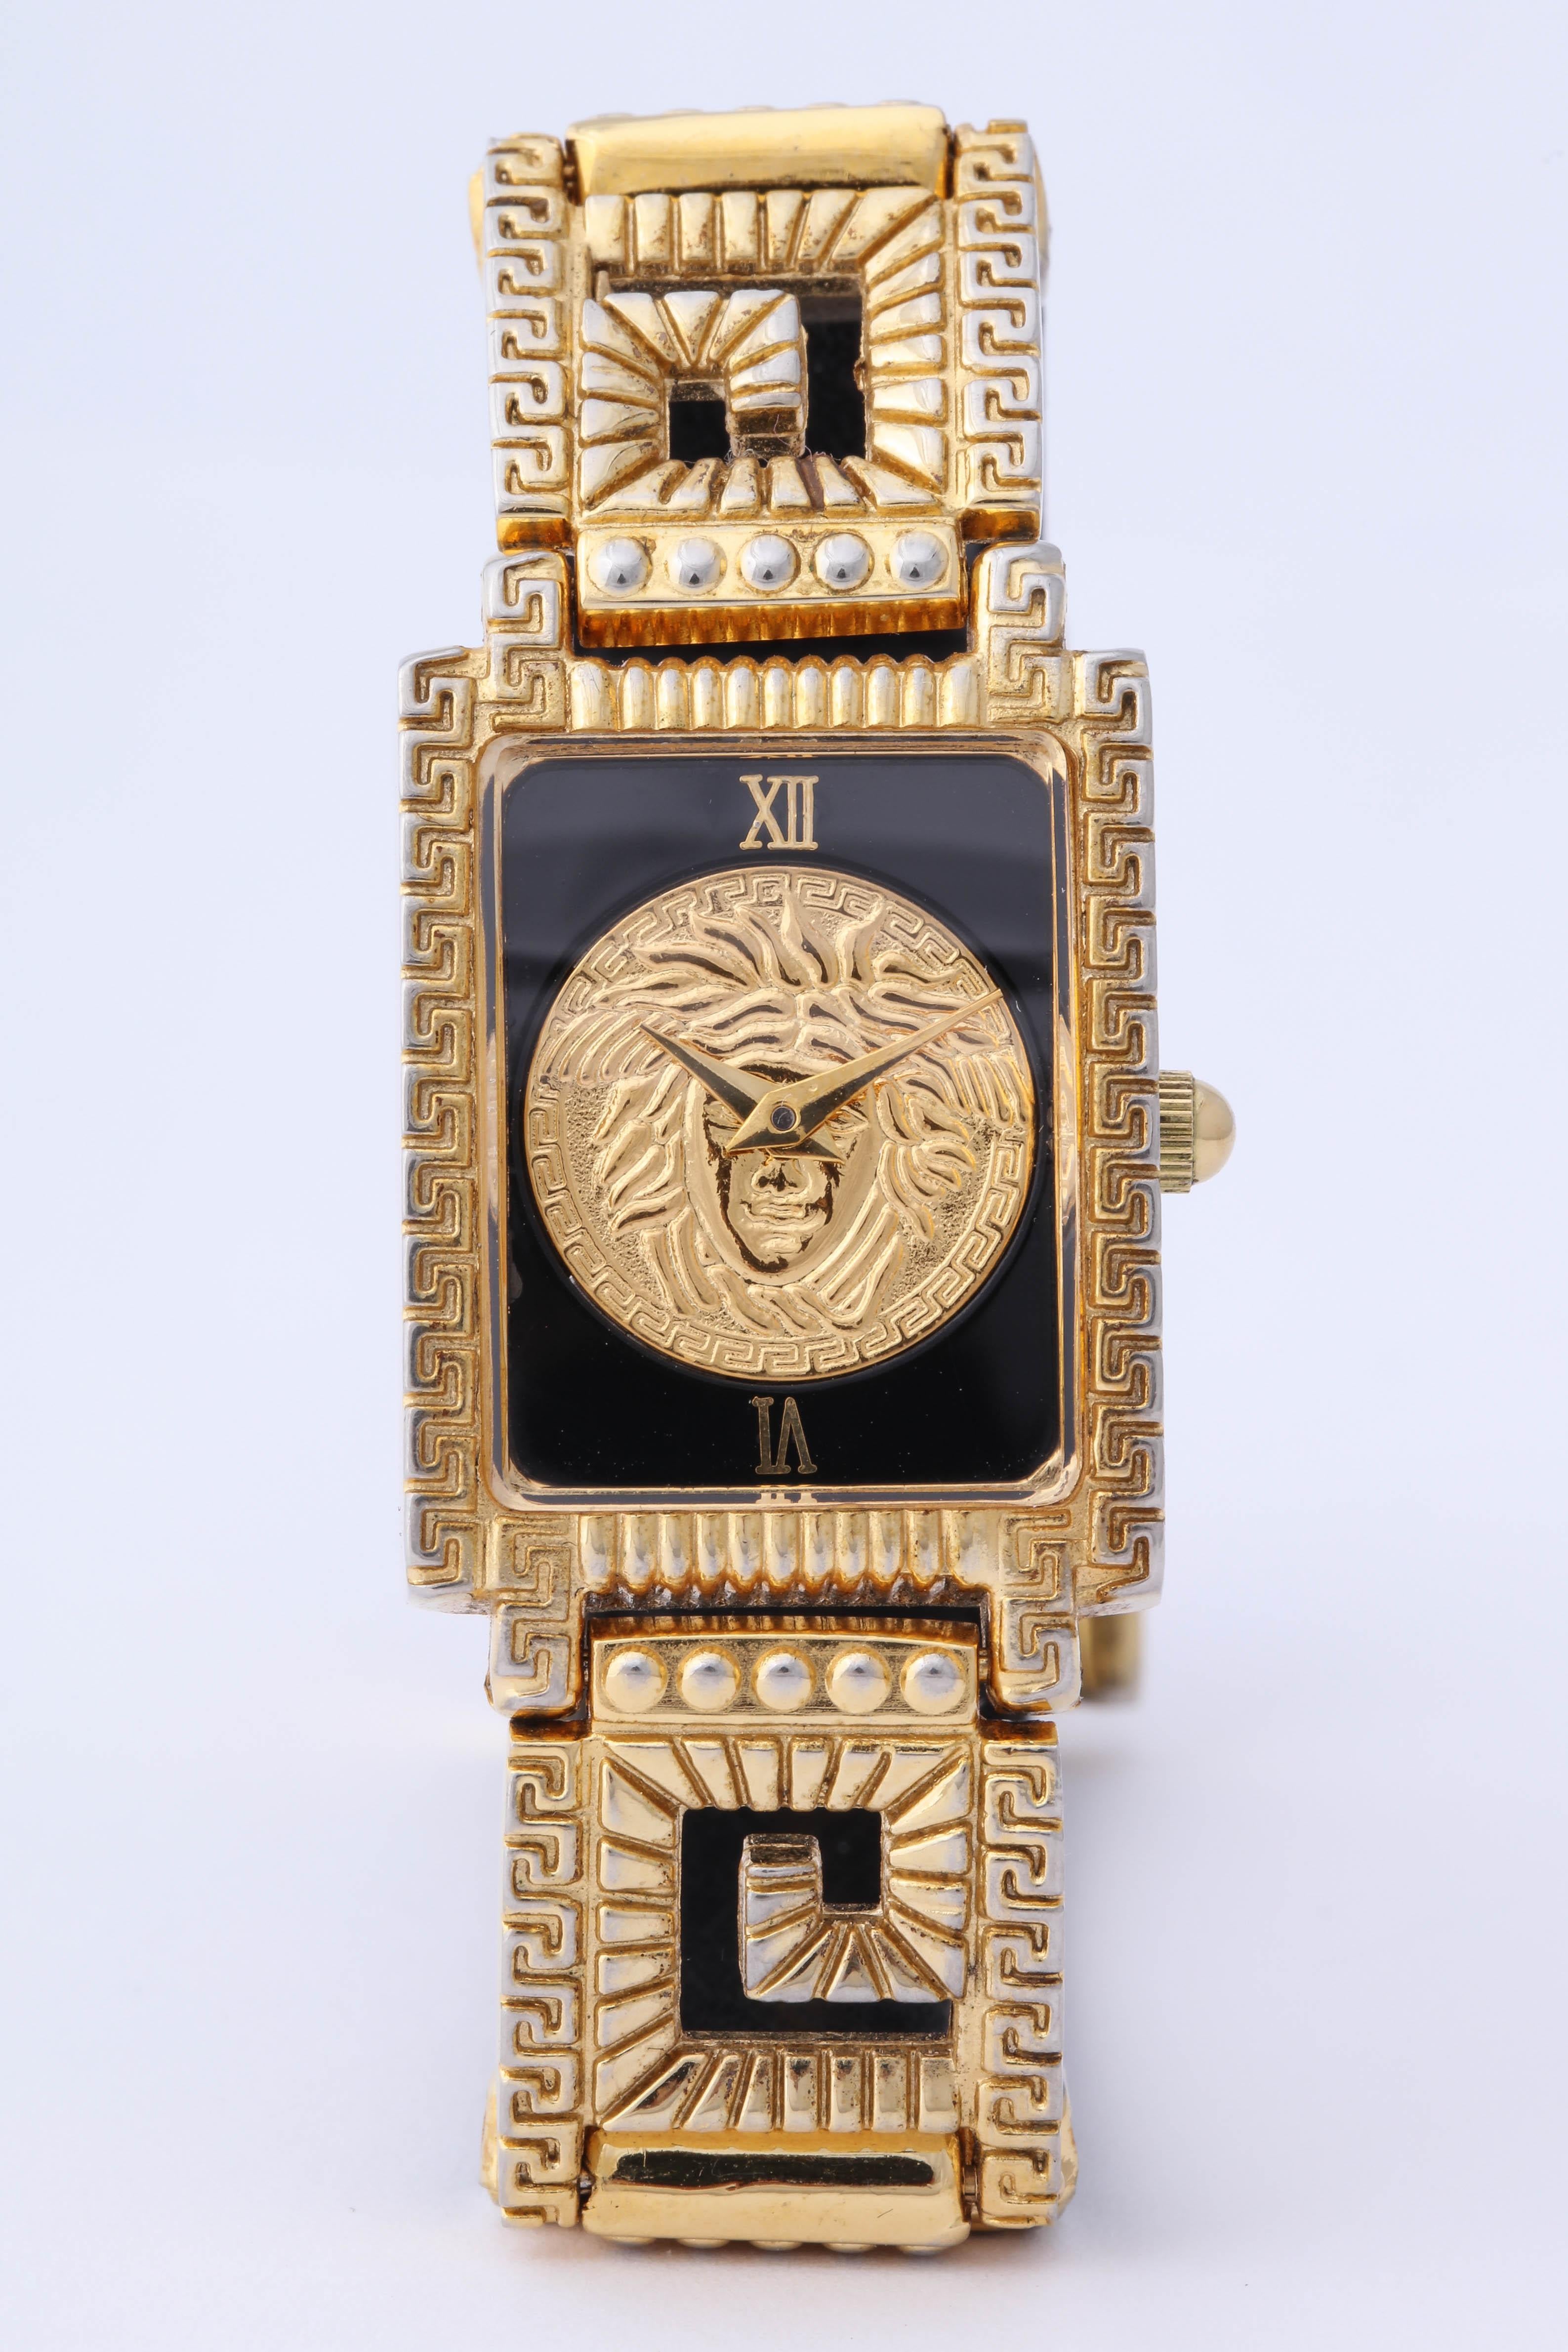   Gianni Versace Medusa Watch with Greek Key Motifs  For Sale 3